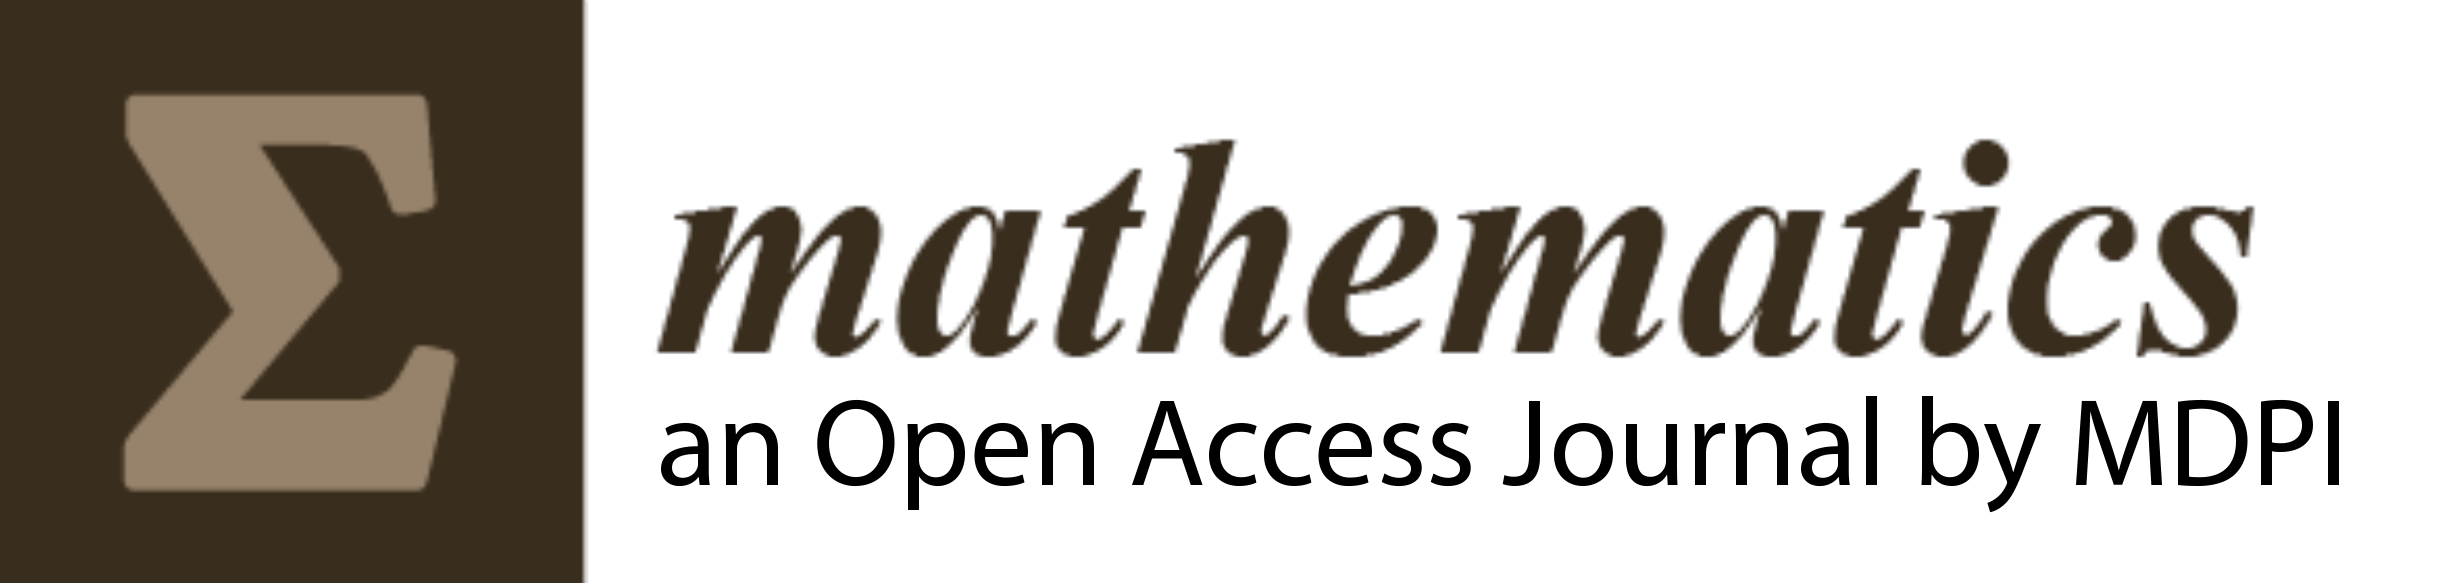 Mathematics logo